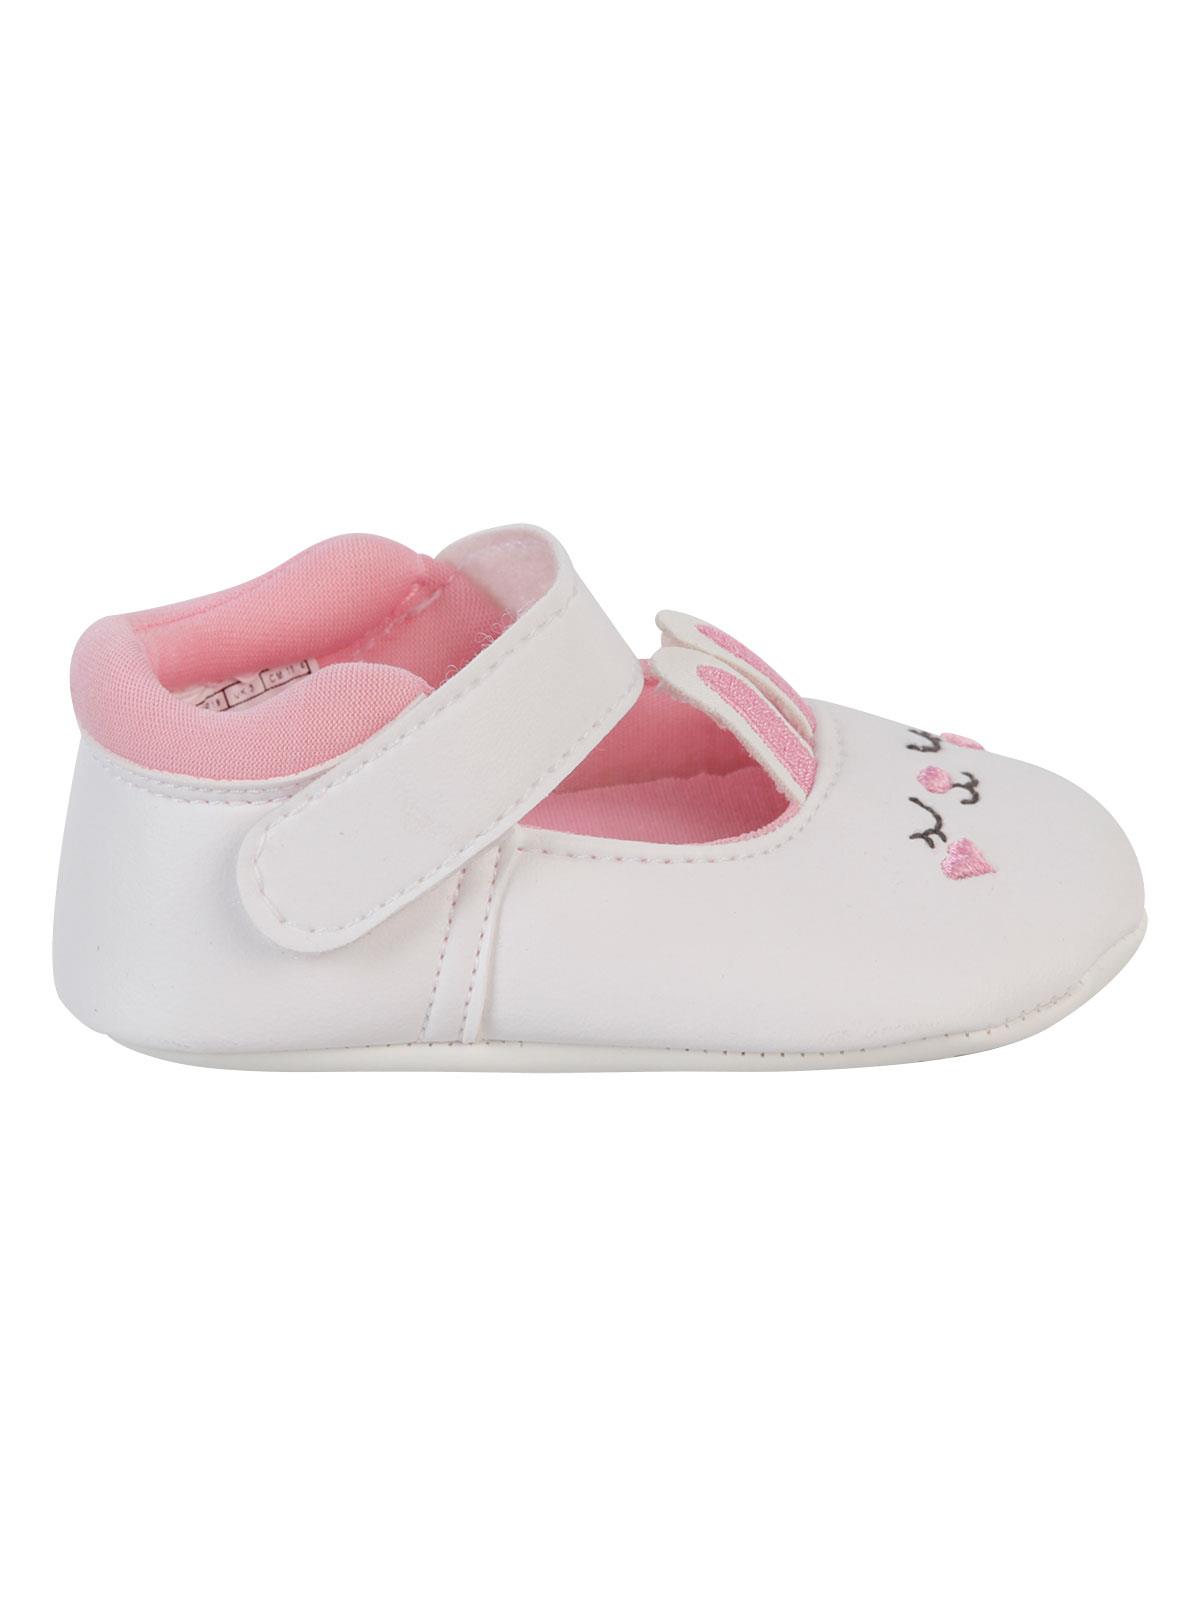 Civil Baby Kız Bebek Patik Ayakkabı 17-19 Numara Pembe